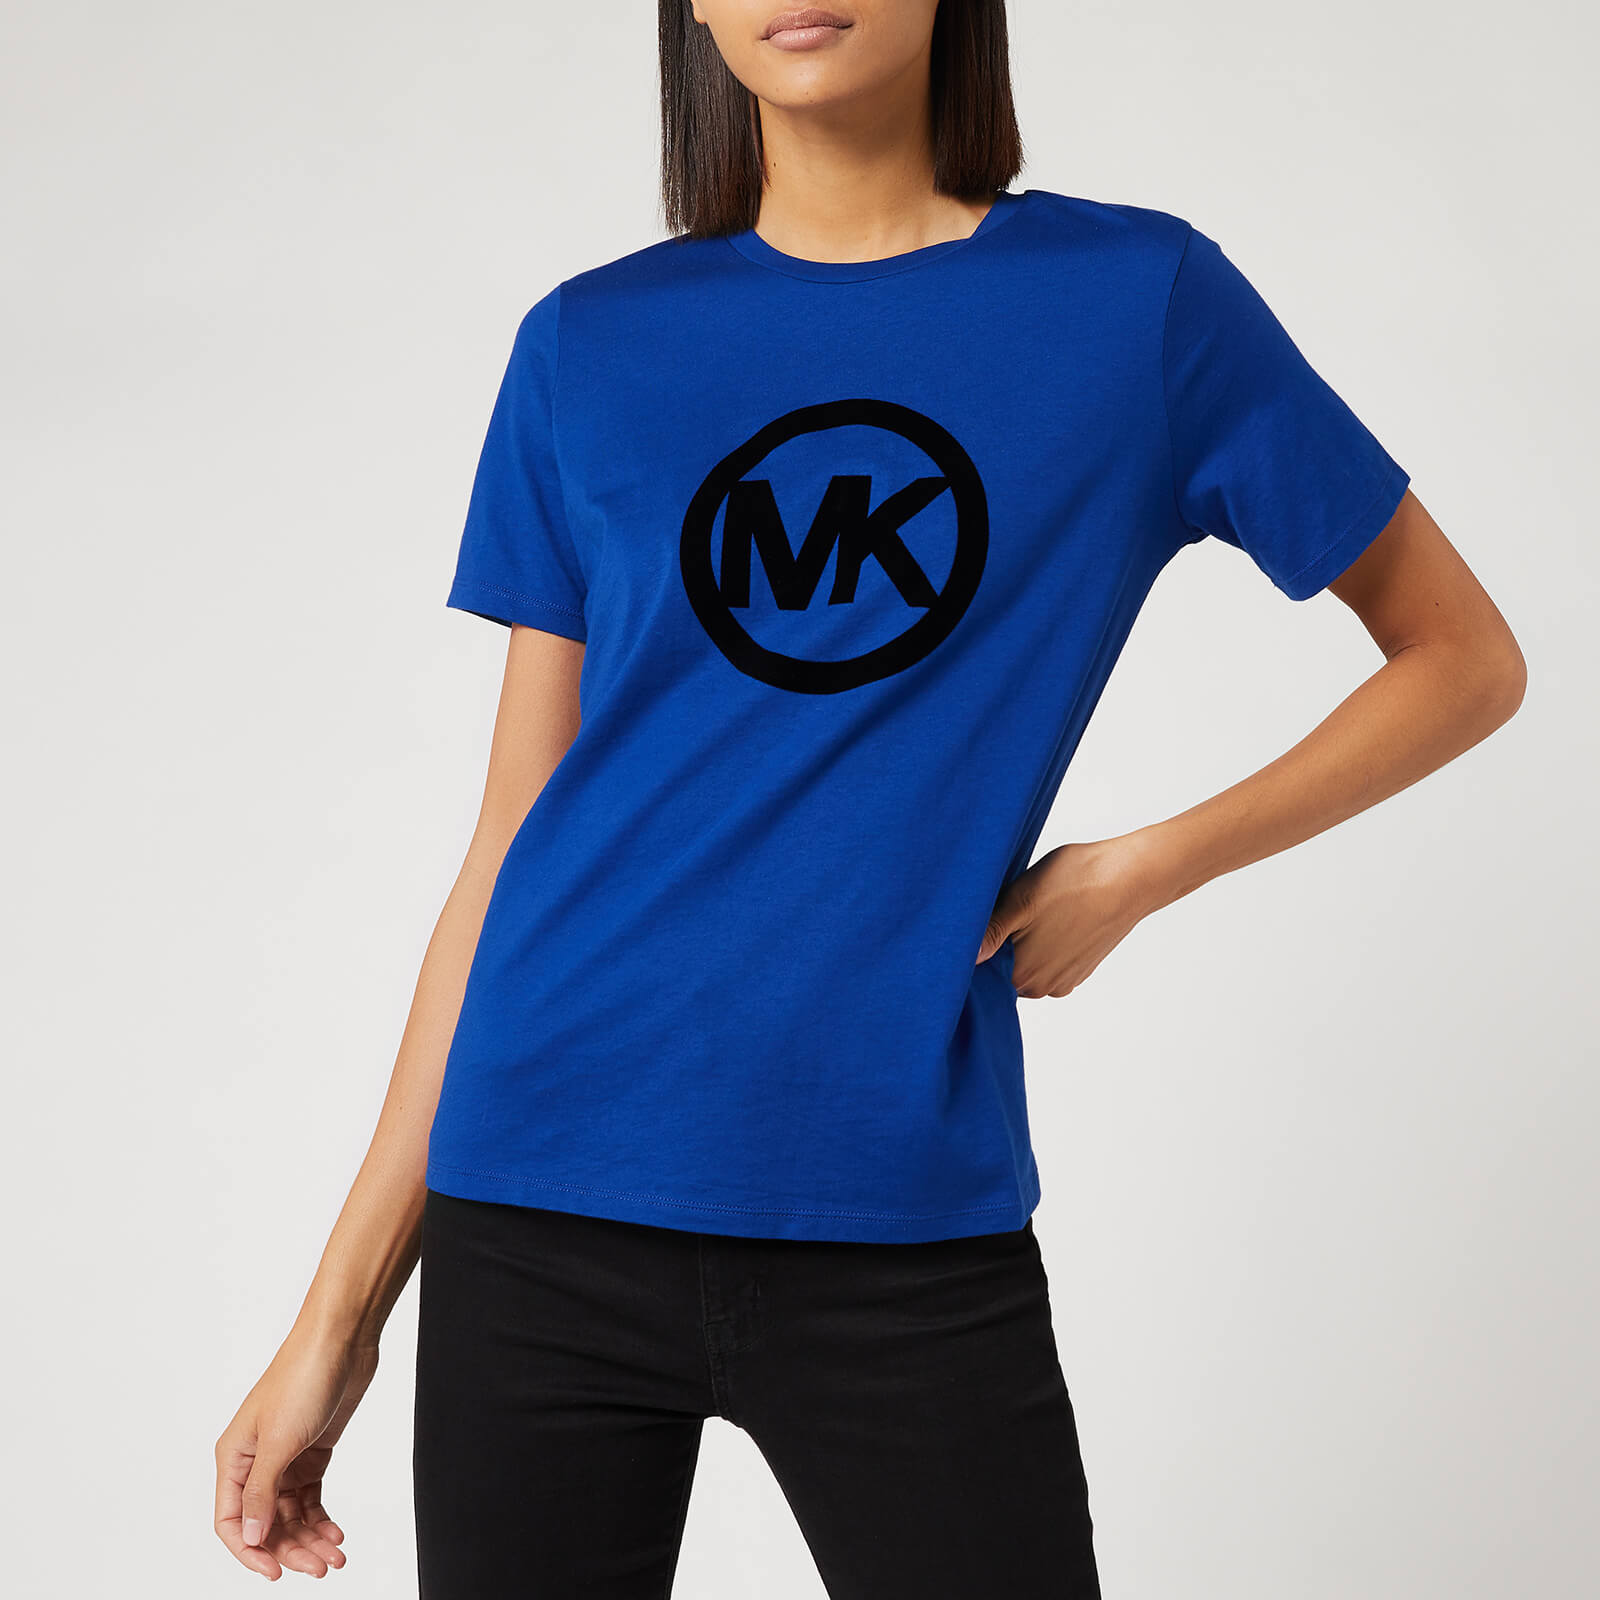 michael kors logo tee shirts